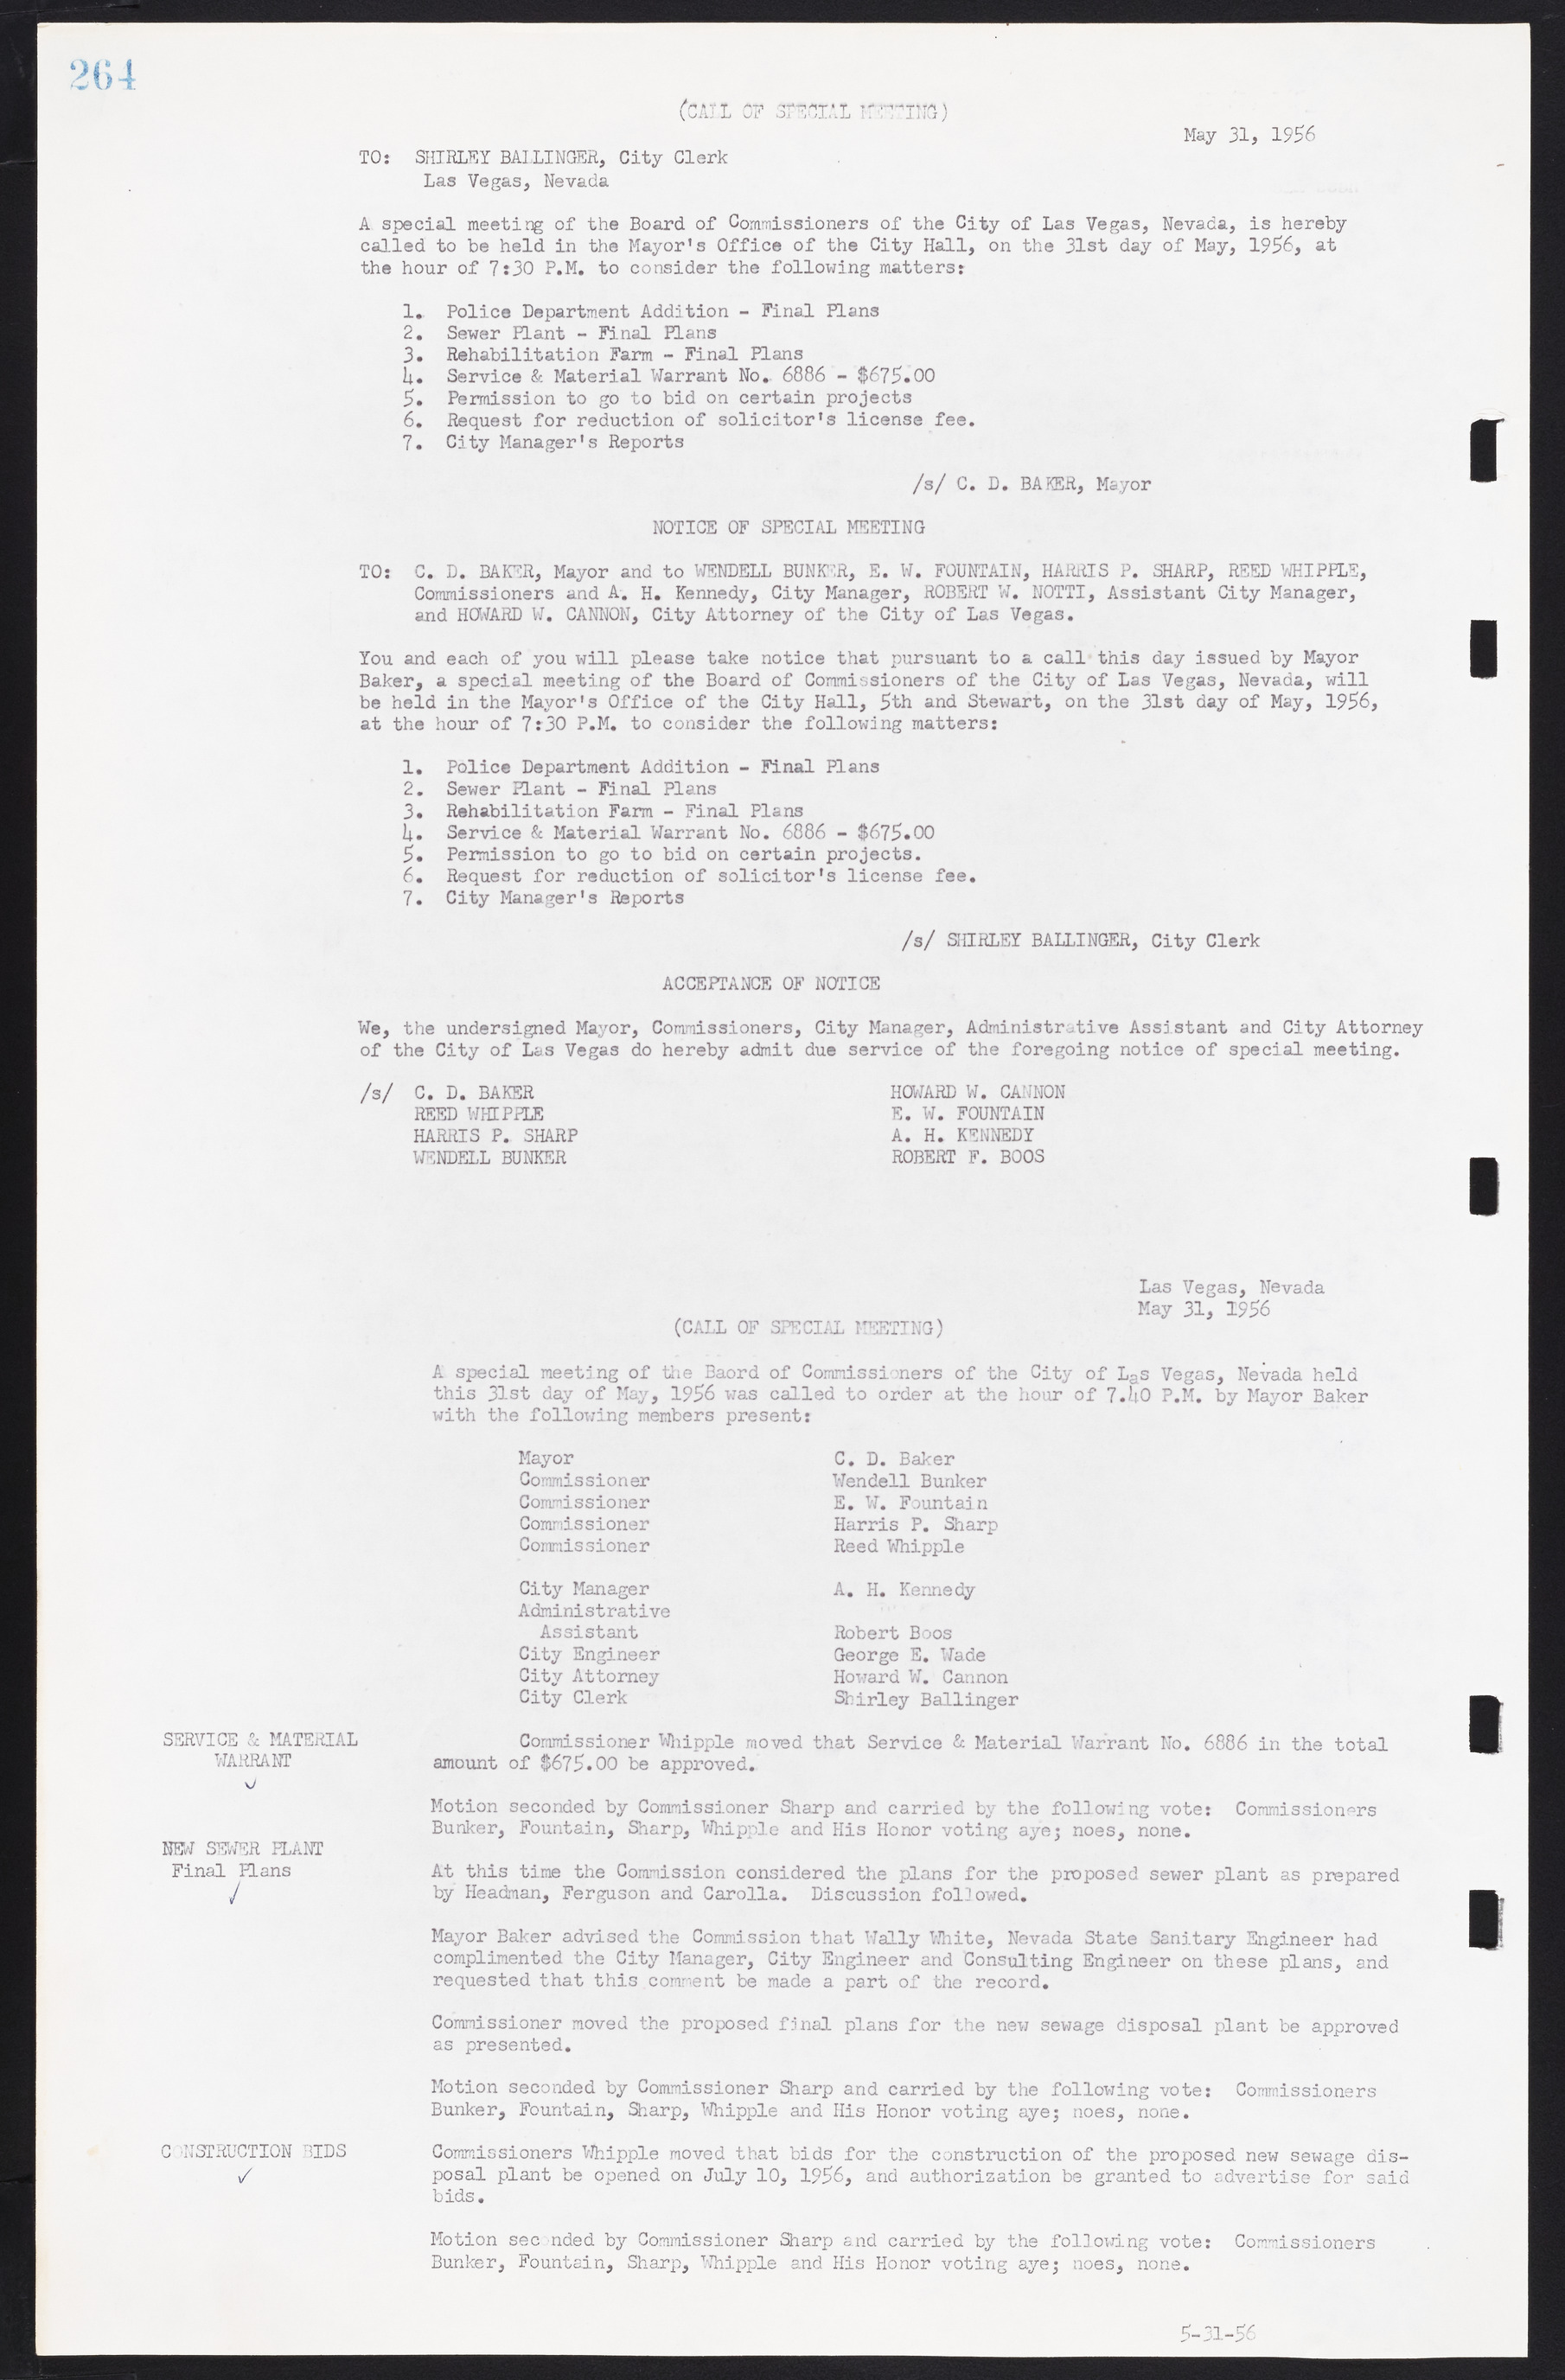 Las Vegas City Commission Minutes, September 21, 1955 to November 20, 1957, lvc000010-284